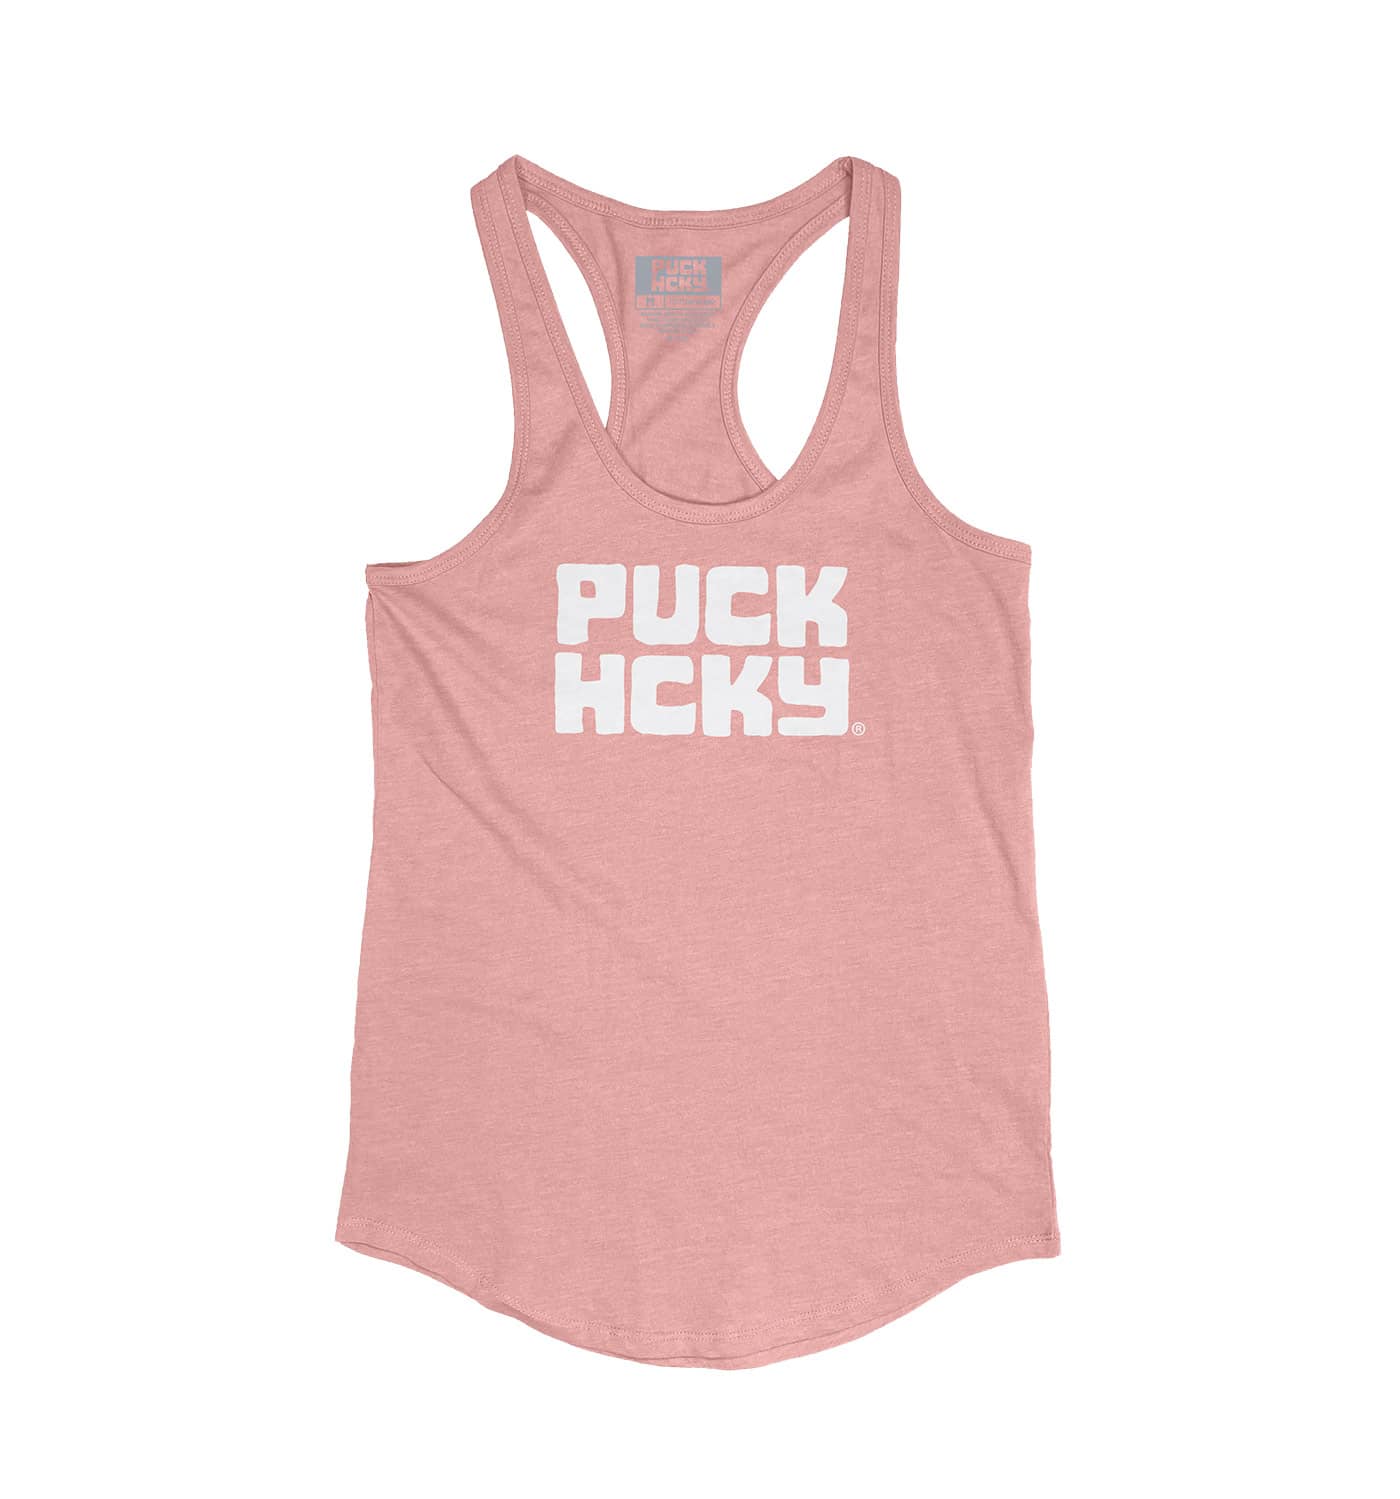 PUCK HCKY 'STACKED' women's hockey tank top in dusty rose